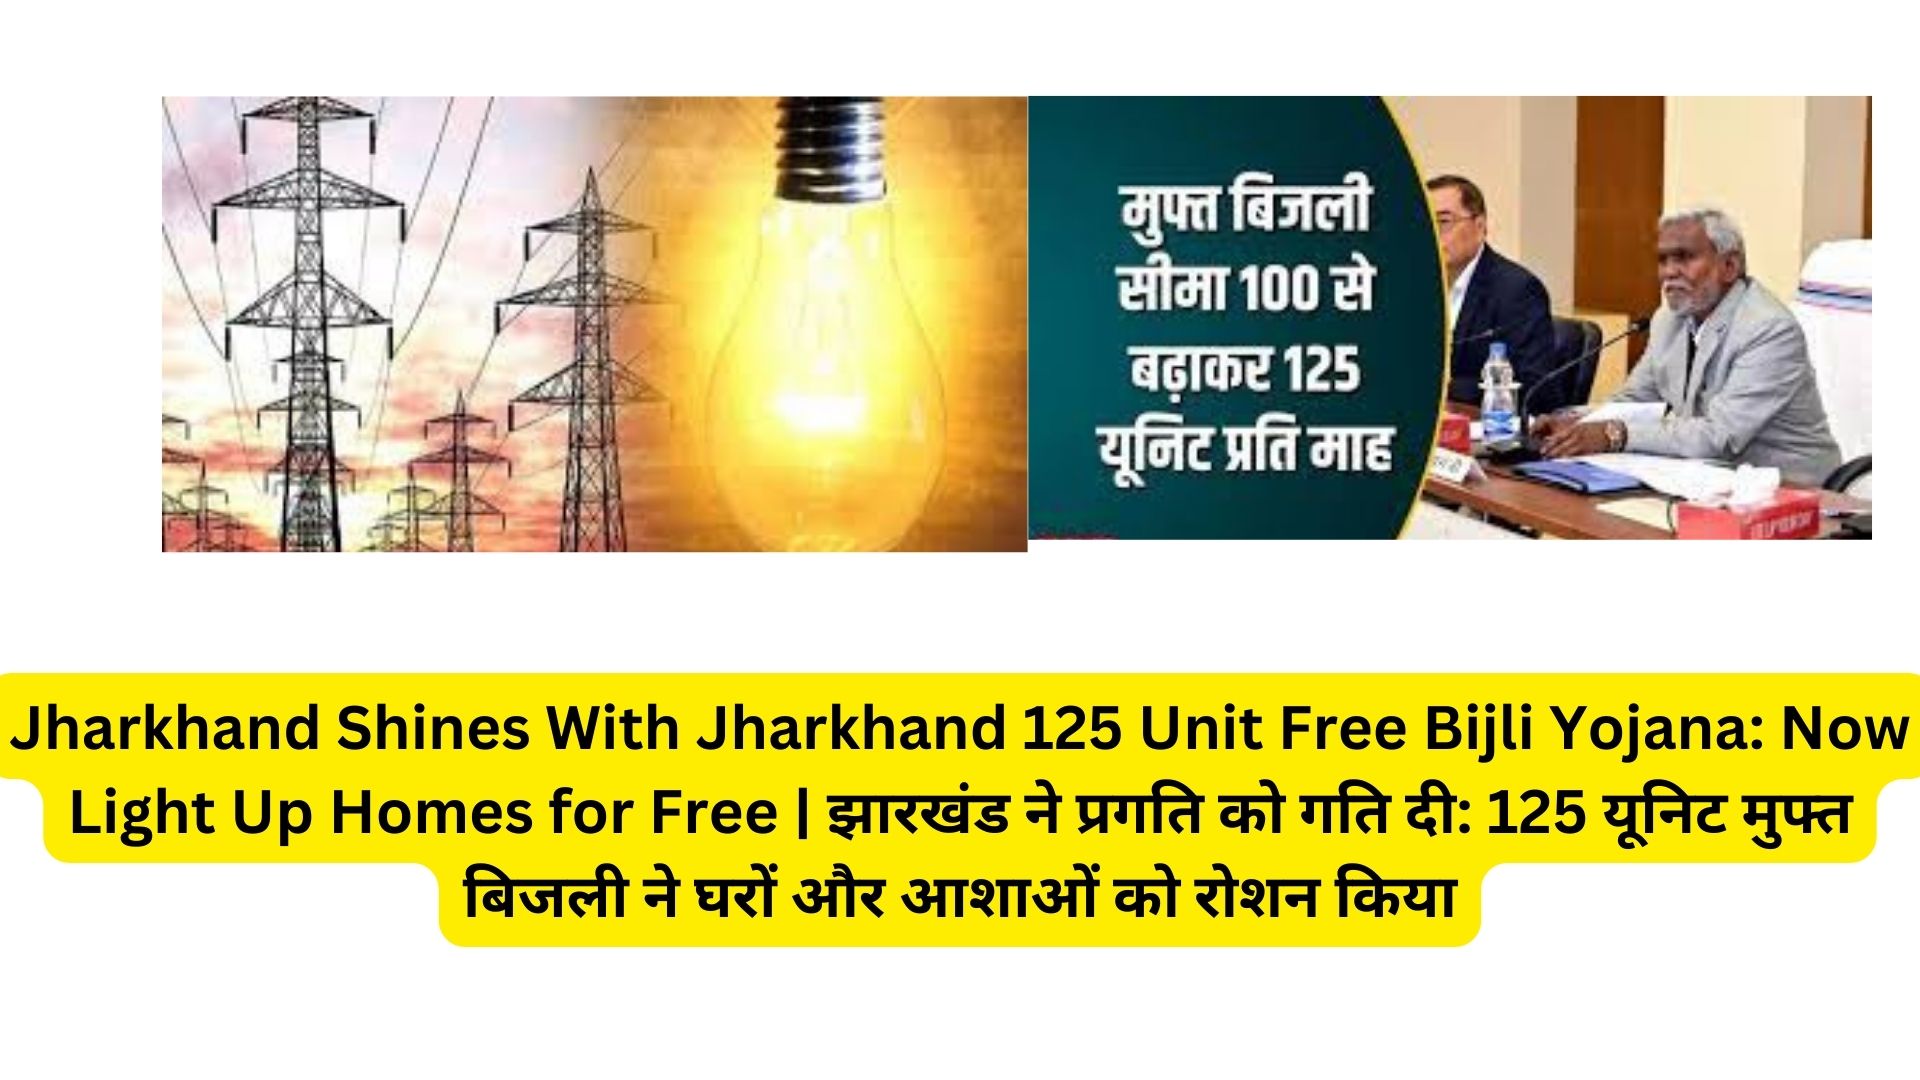 Jharkhand Shines With Jharkhand 125 Unit Free Bijli Yojana: Now Light Up Homes for Free | झारखंड ने प्रगति को गति दी: 125 यूनिट मुफ्त बिजली ने घरों और आशाओं को रोशन किया